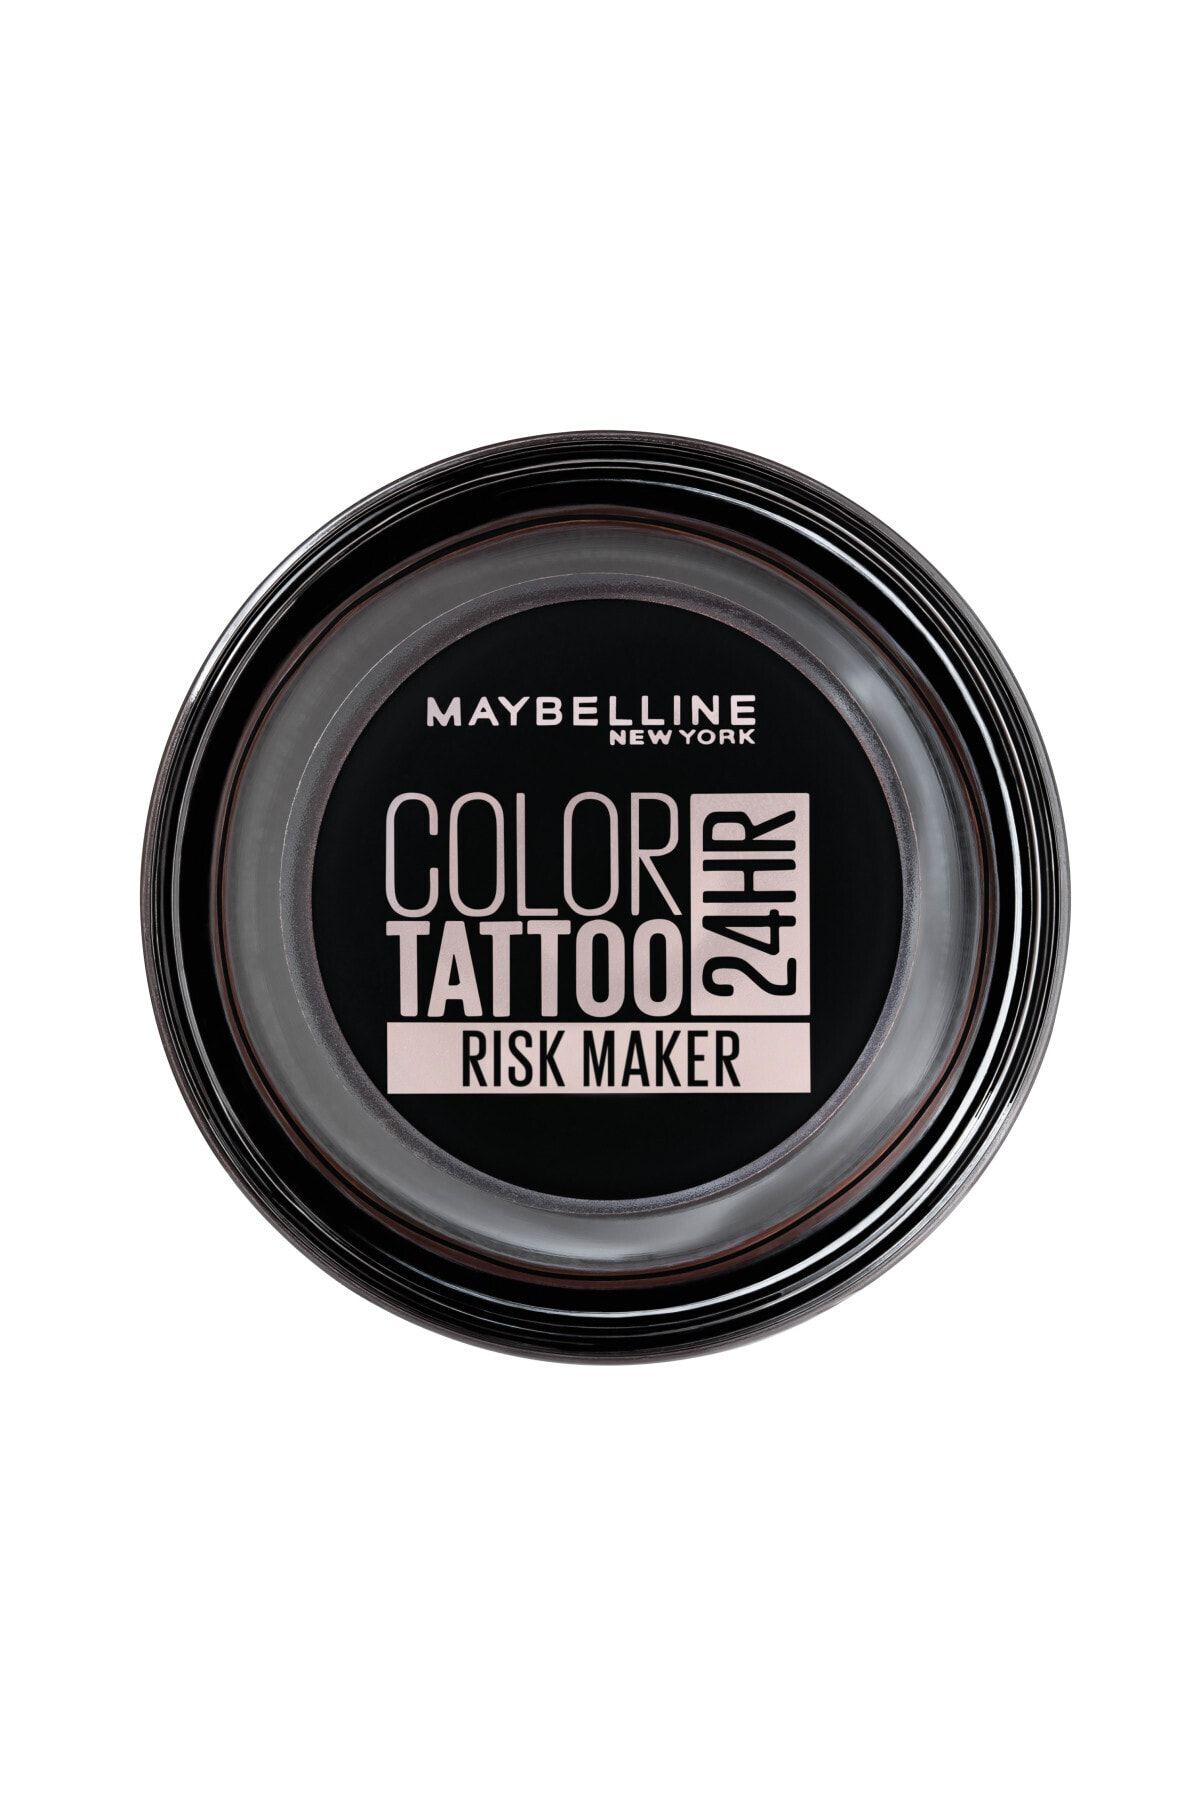 Maybelline Color Tattoo 190 risk maker